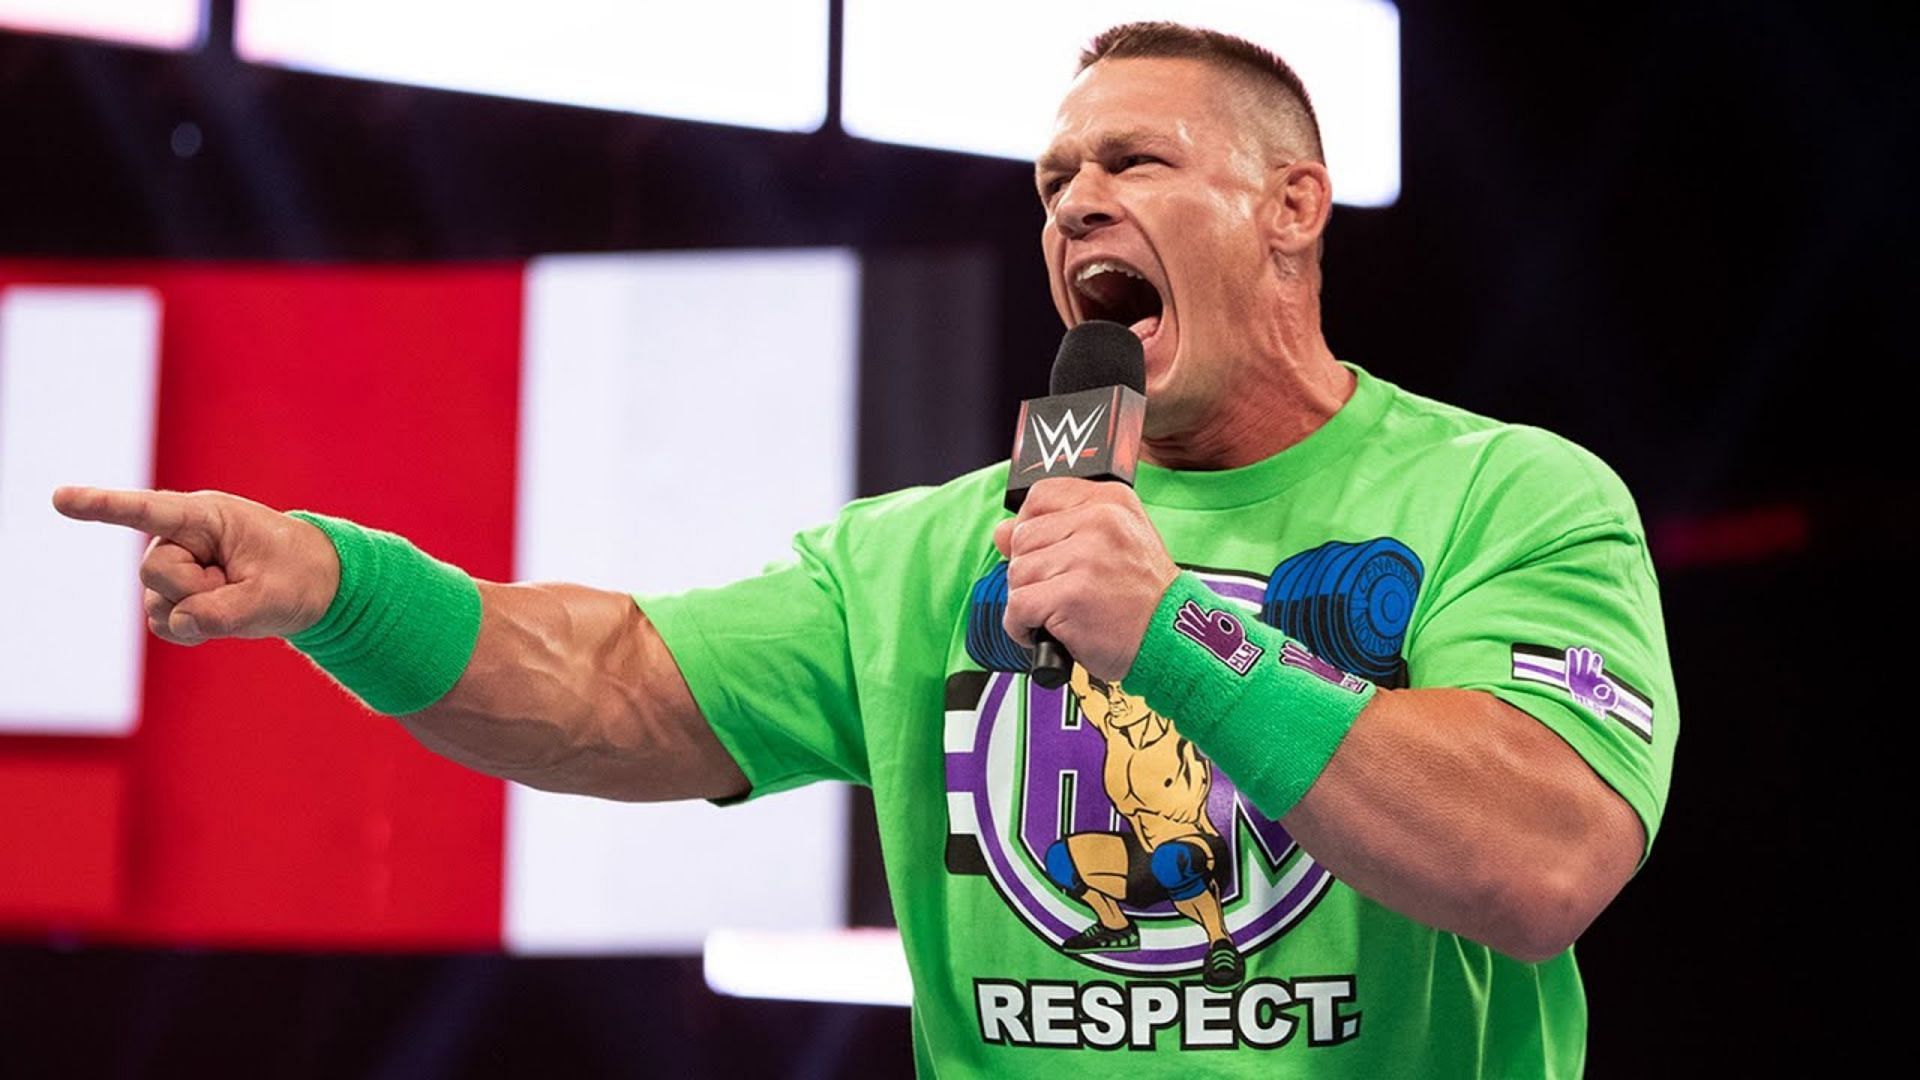 16-time WWE World Champion John Cena